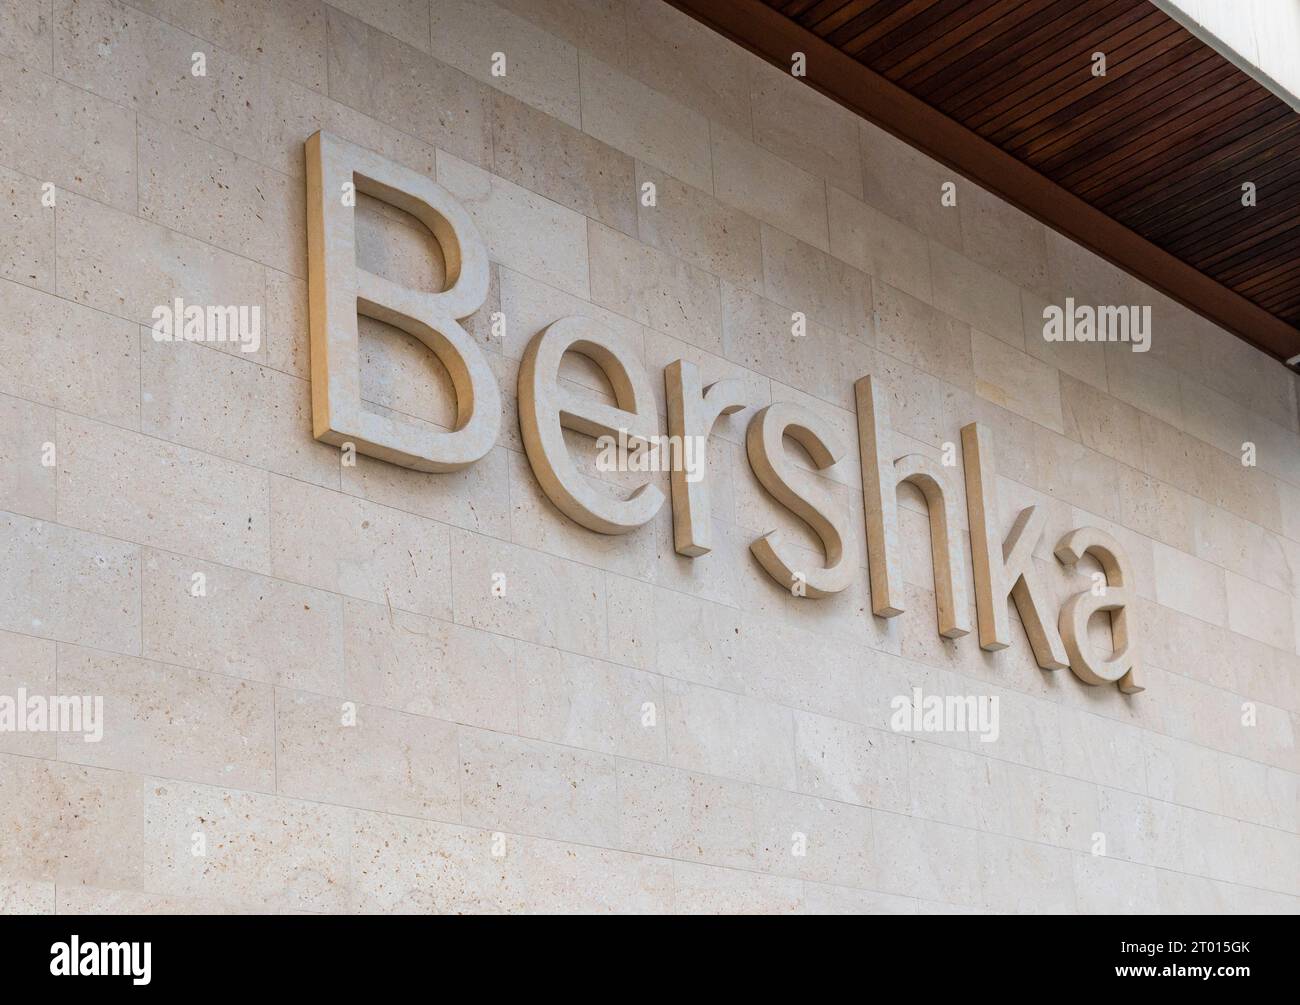 Bershka logo brand name hi-res stock photography and images - Alamy